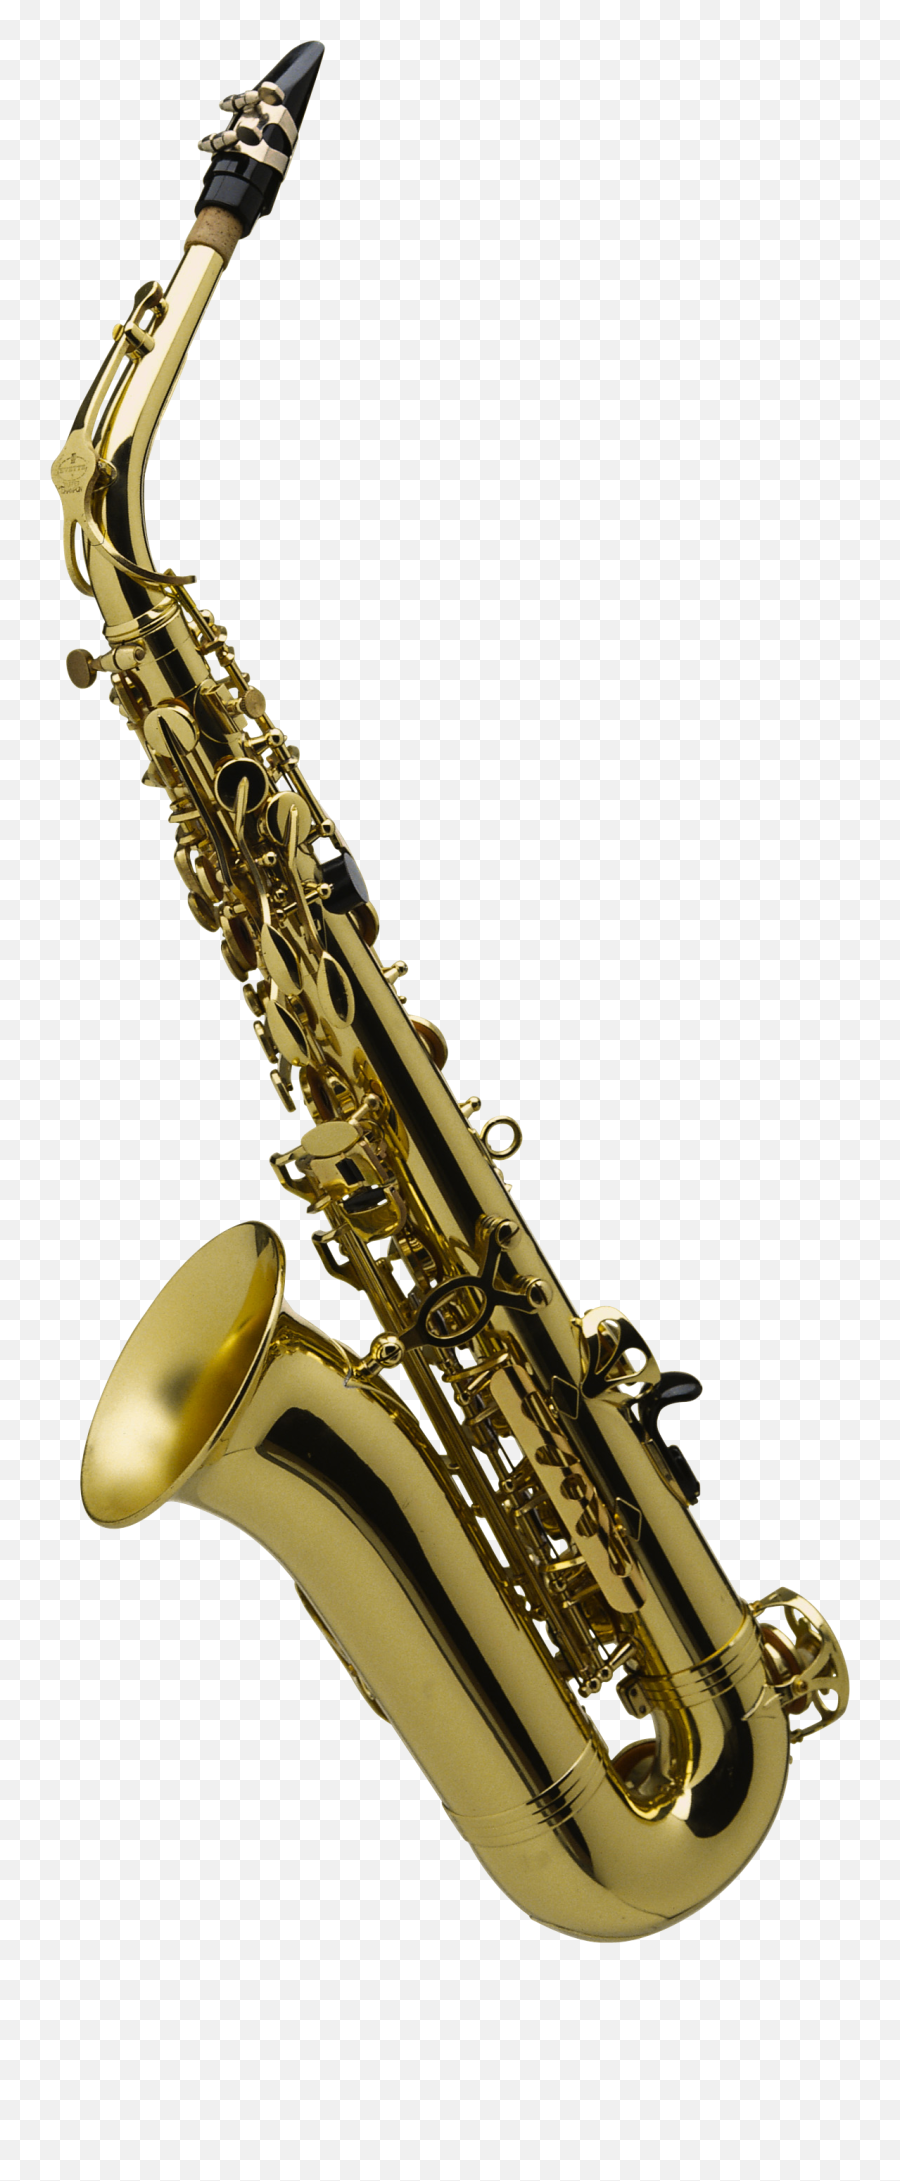 Trumpet And Saxophone Transparent Png Image Web Icons - Saxophone Transparent Background,Trumpet Transparent